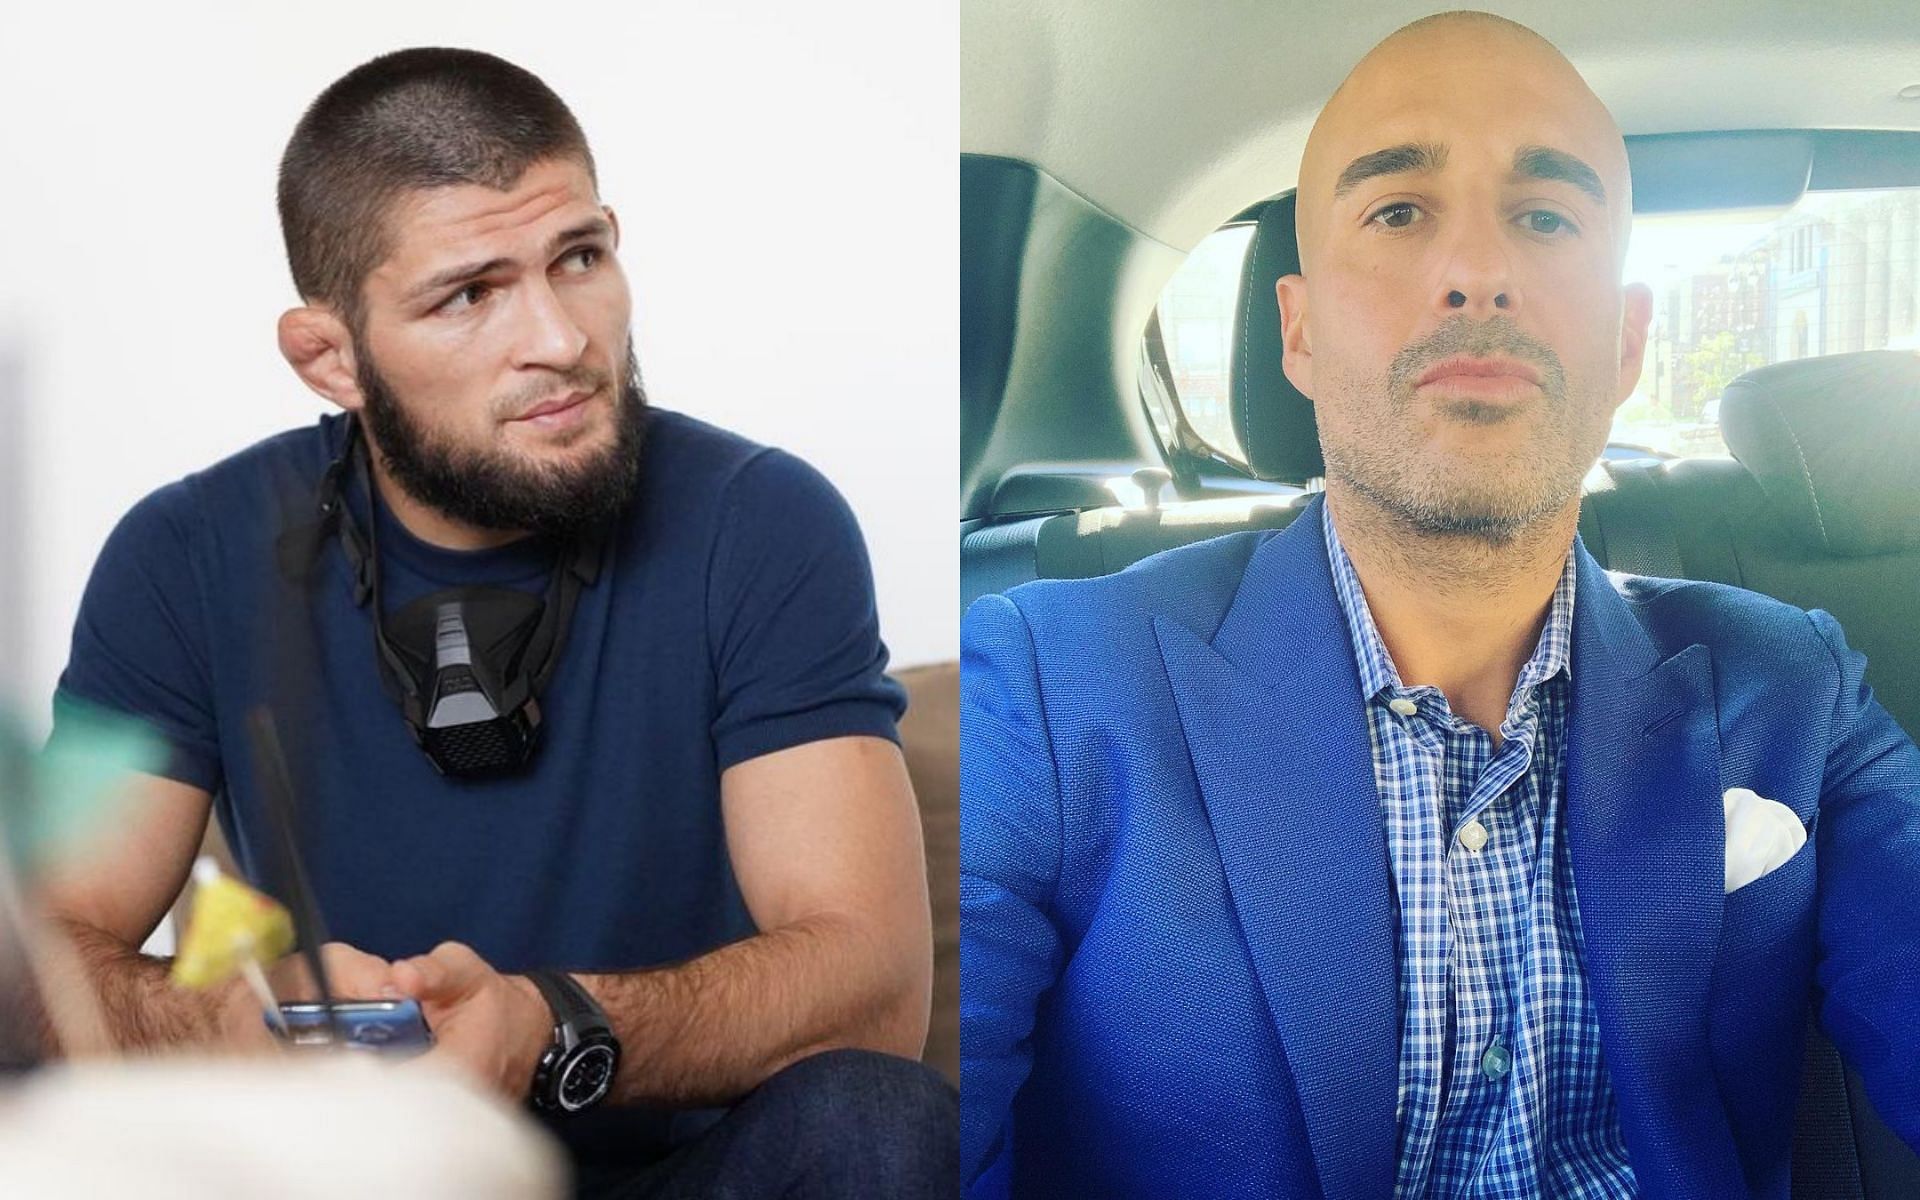 Khabib Nurmagomedov (left) and Jon Anik (right) [Image Courtesy: @khabib_nurmagomedov and @jon_anik on Instagram]